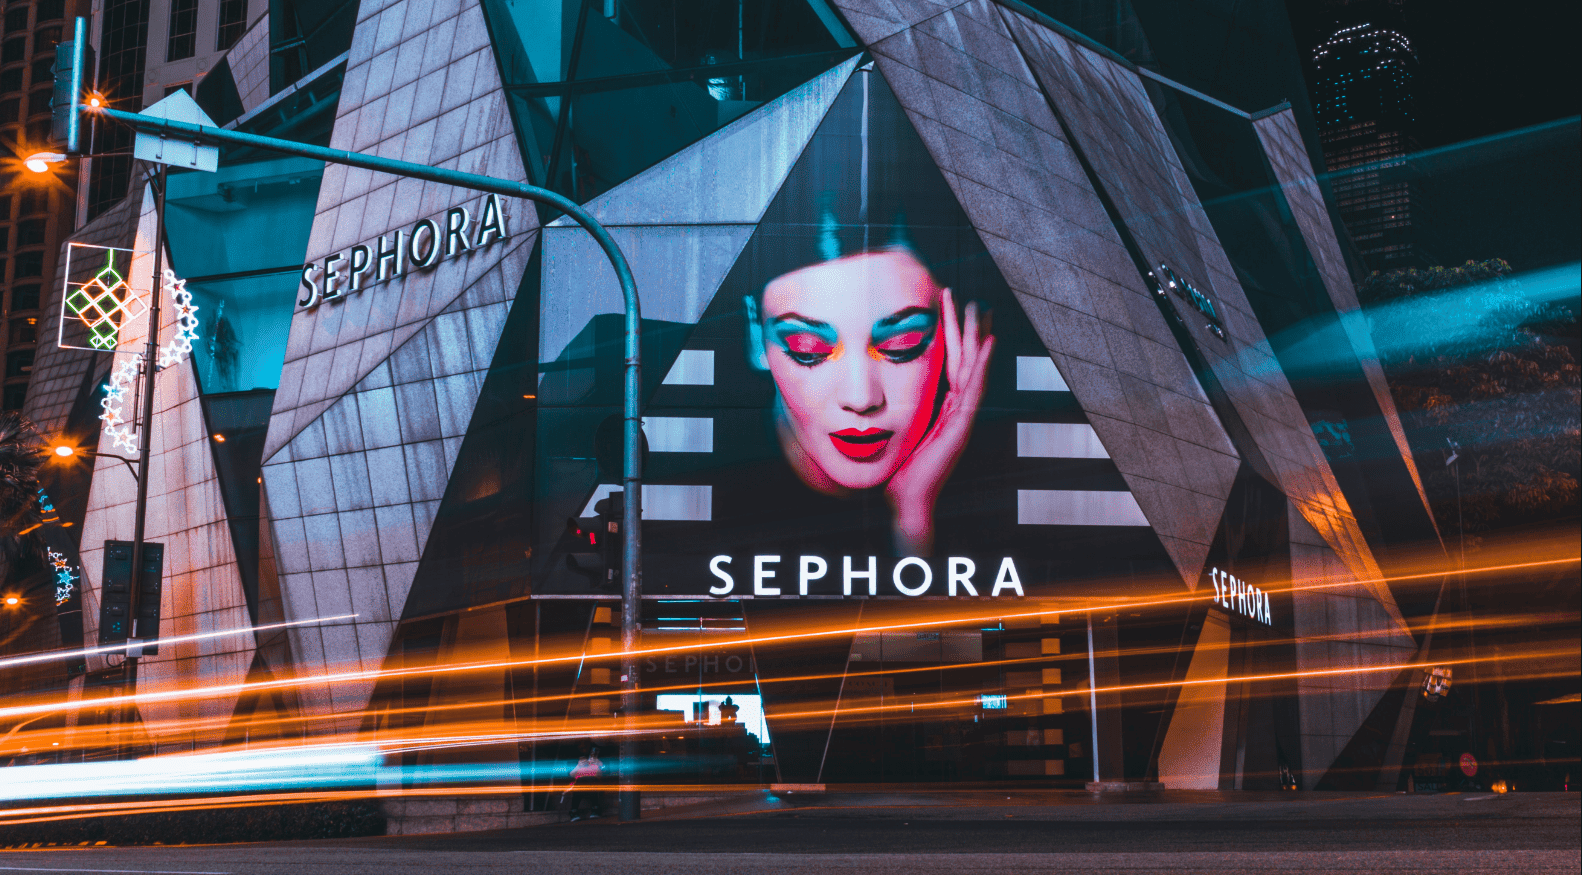 Sephora store image from Unsplash